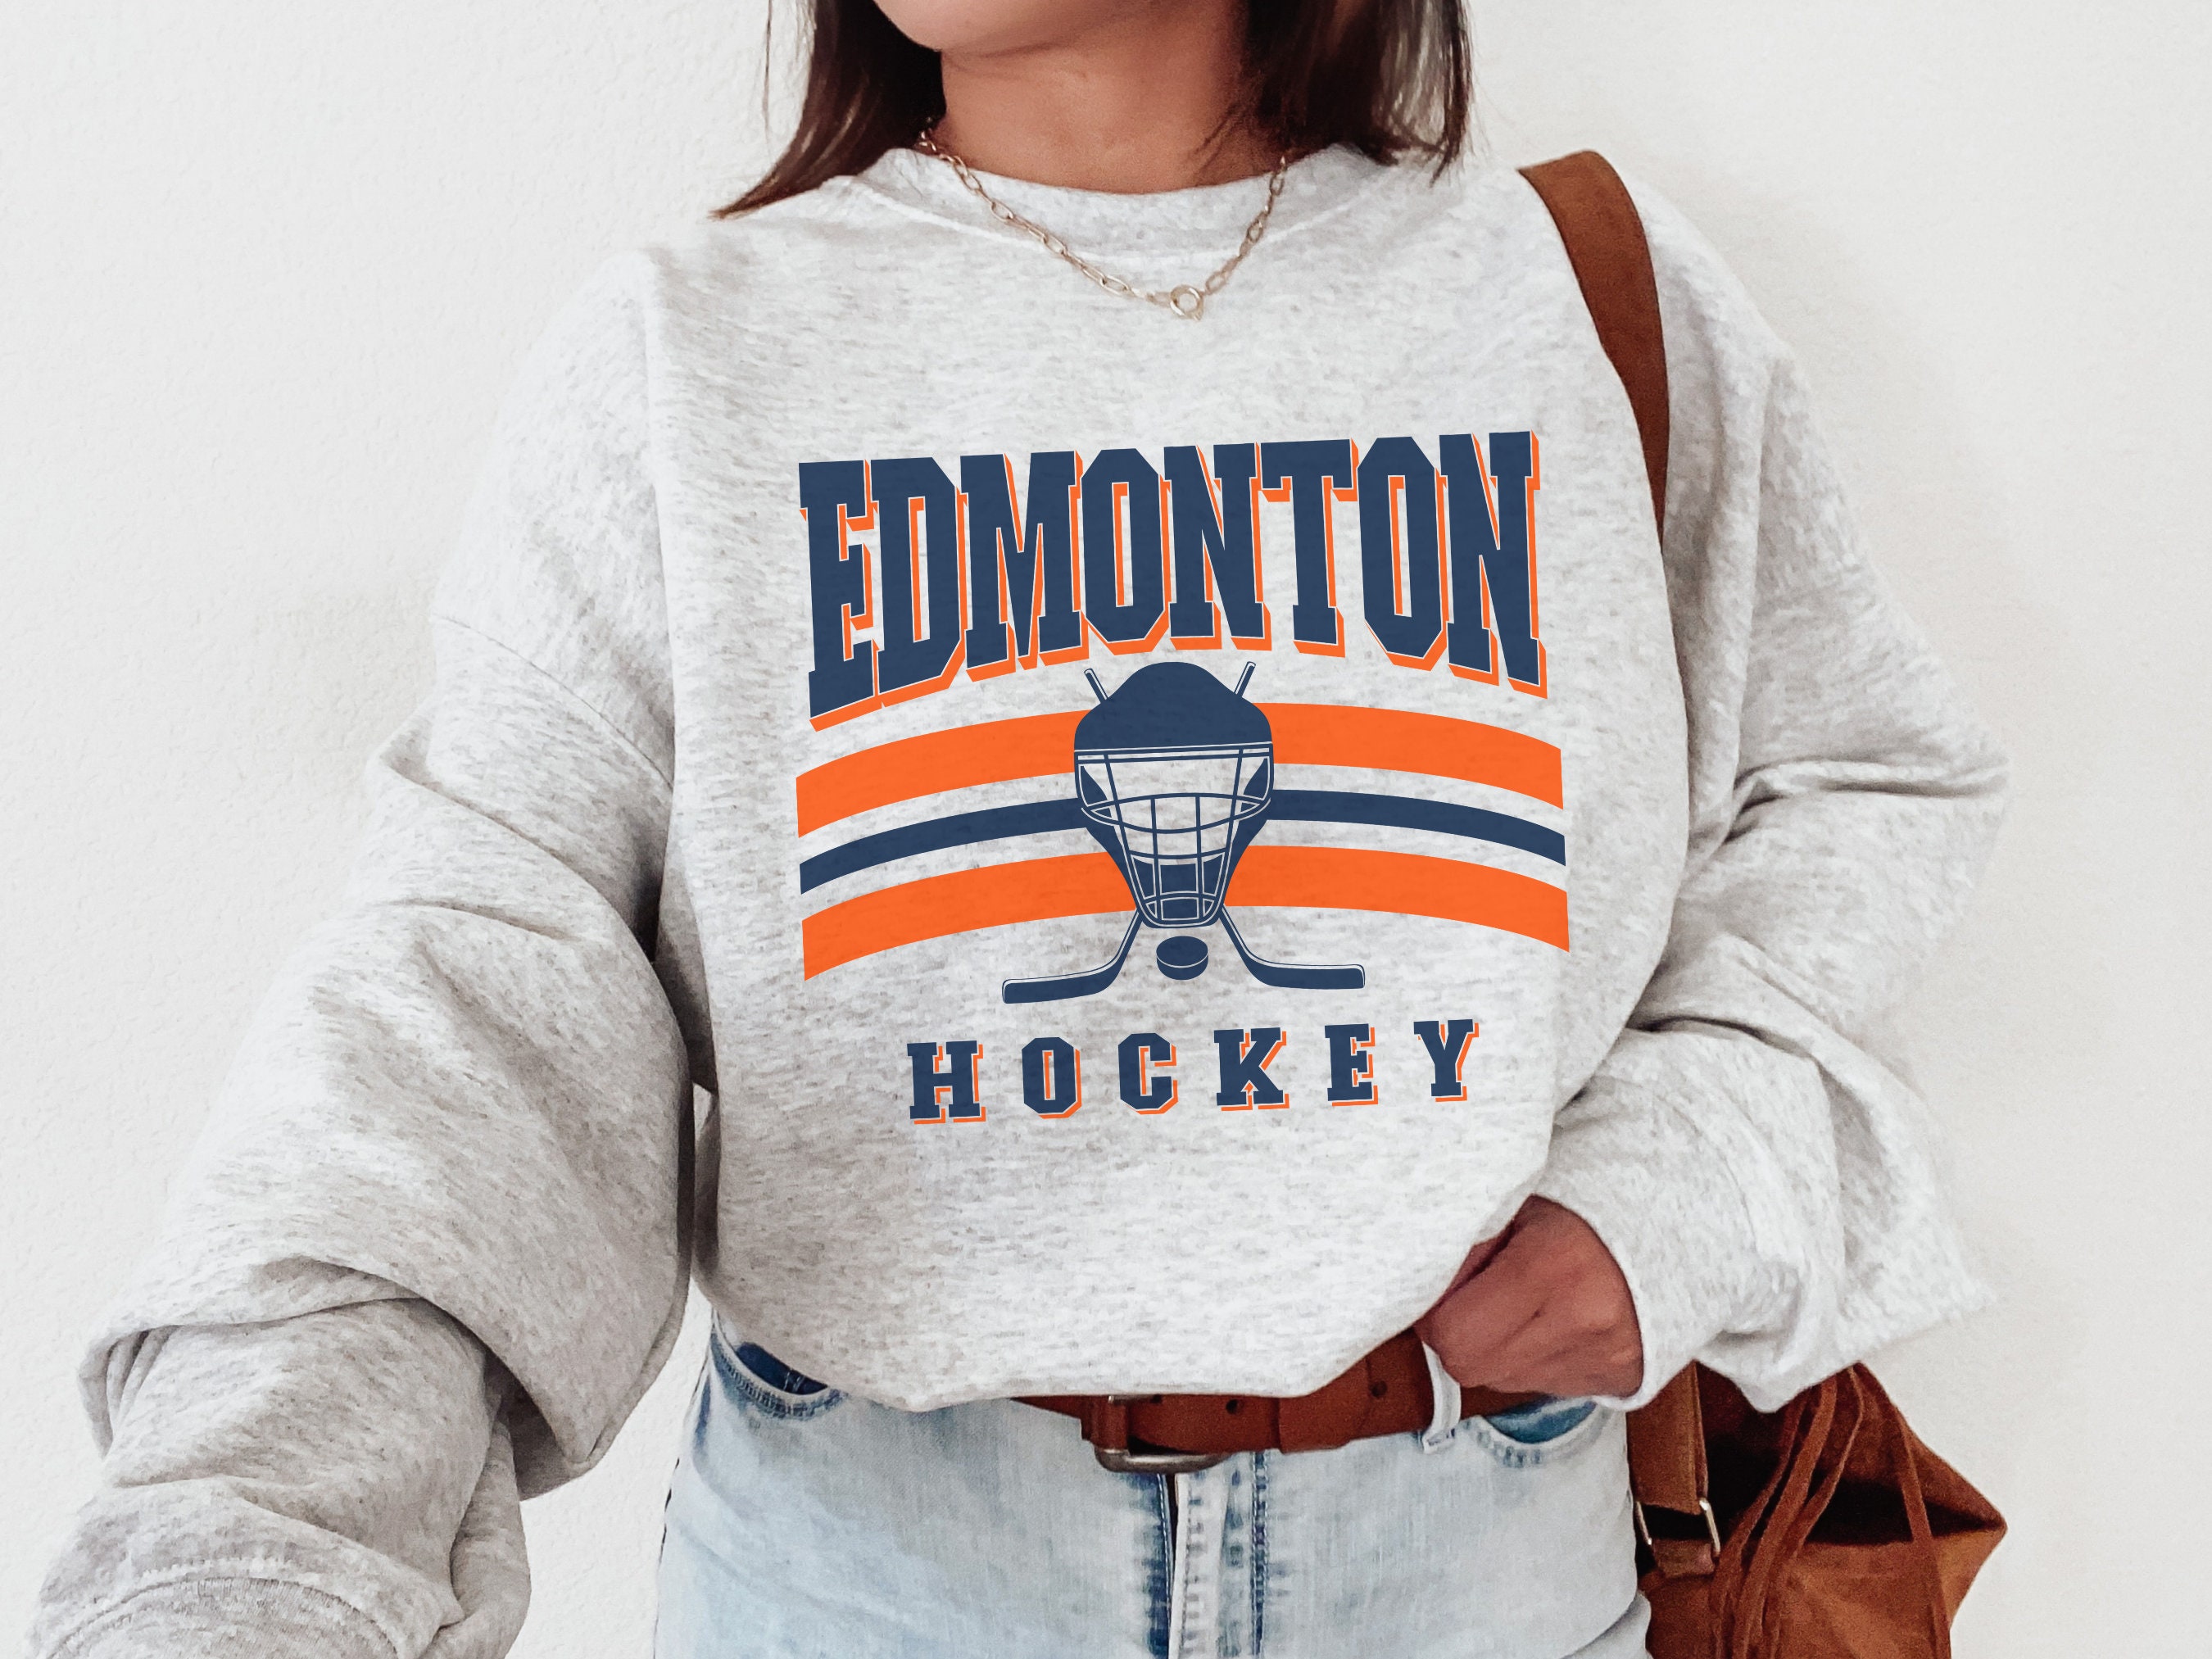 Official edmonton Oilers Turtle Island Logo shirt, sweater, hoodie